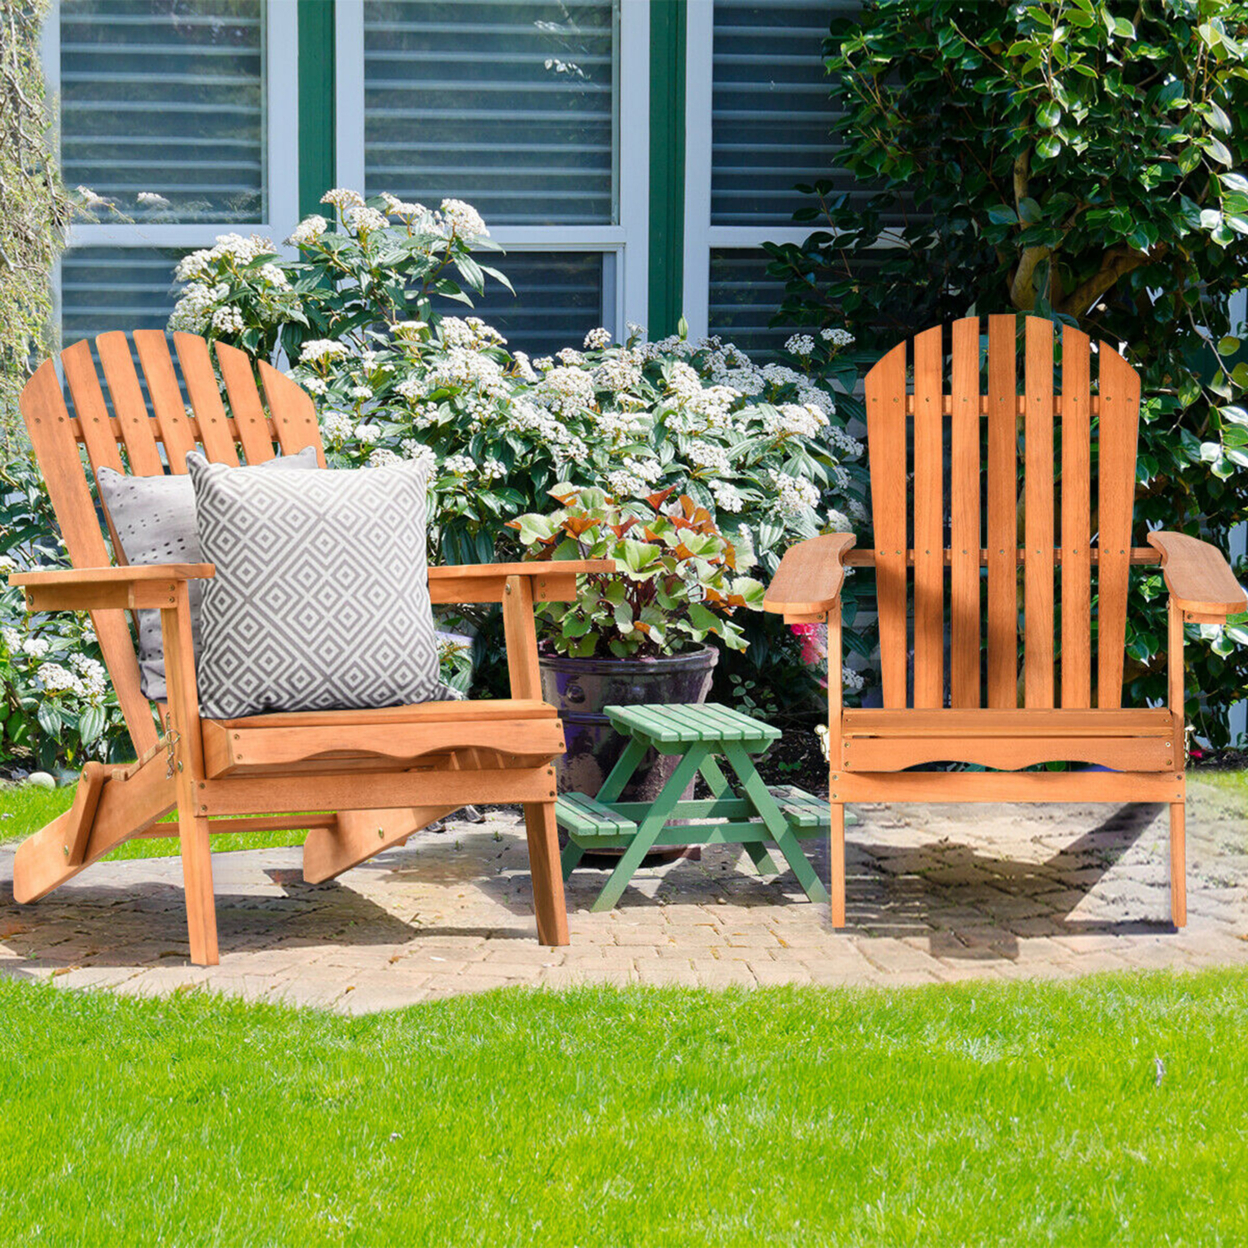 4 PCS Eucalyptus Adirondack Chair Foldable Outdoor Wood Lounger Chair Natural